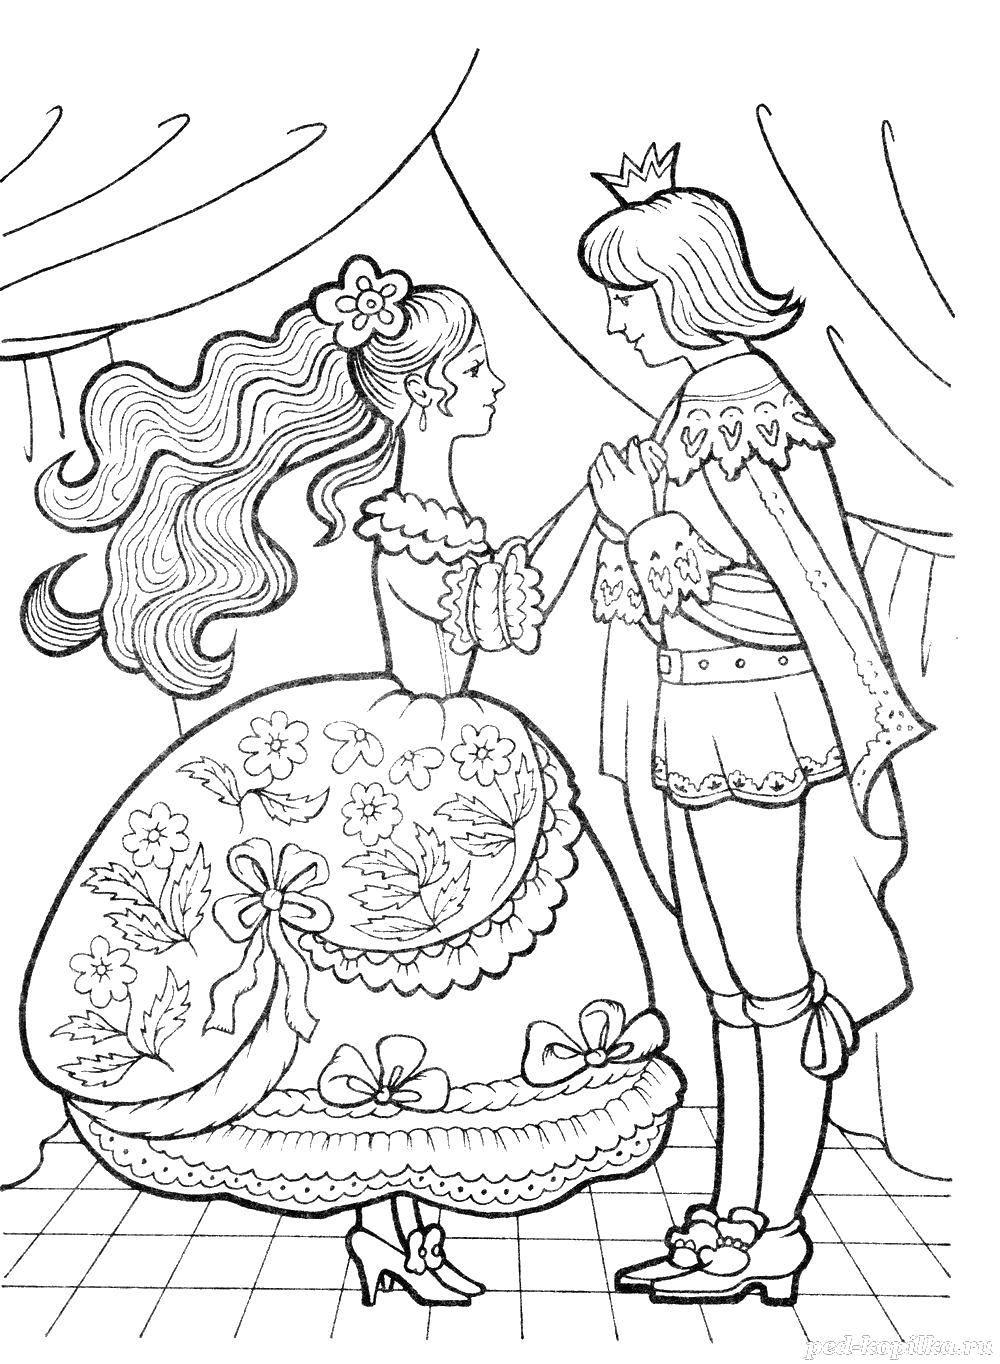 Coloring The Prince and Princess at the ball. Category Princess. Tags:  Princess , Prince.